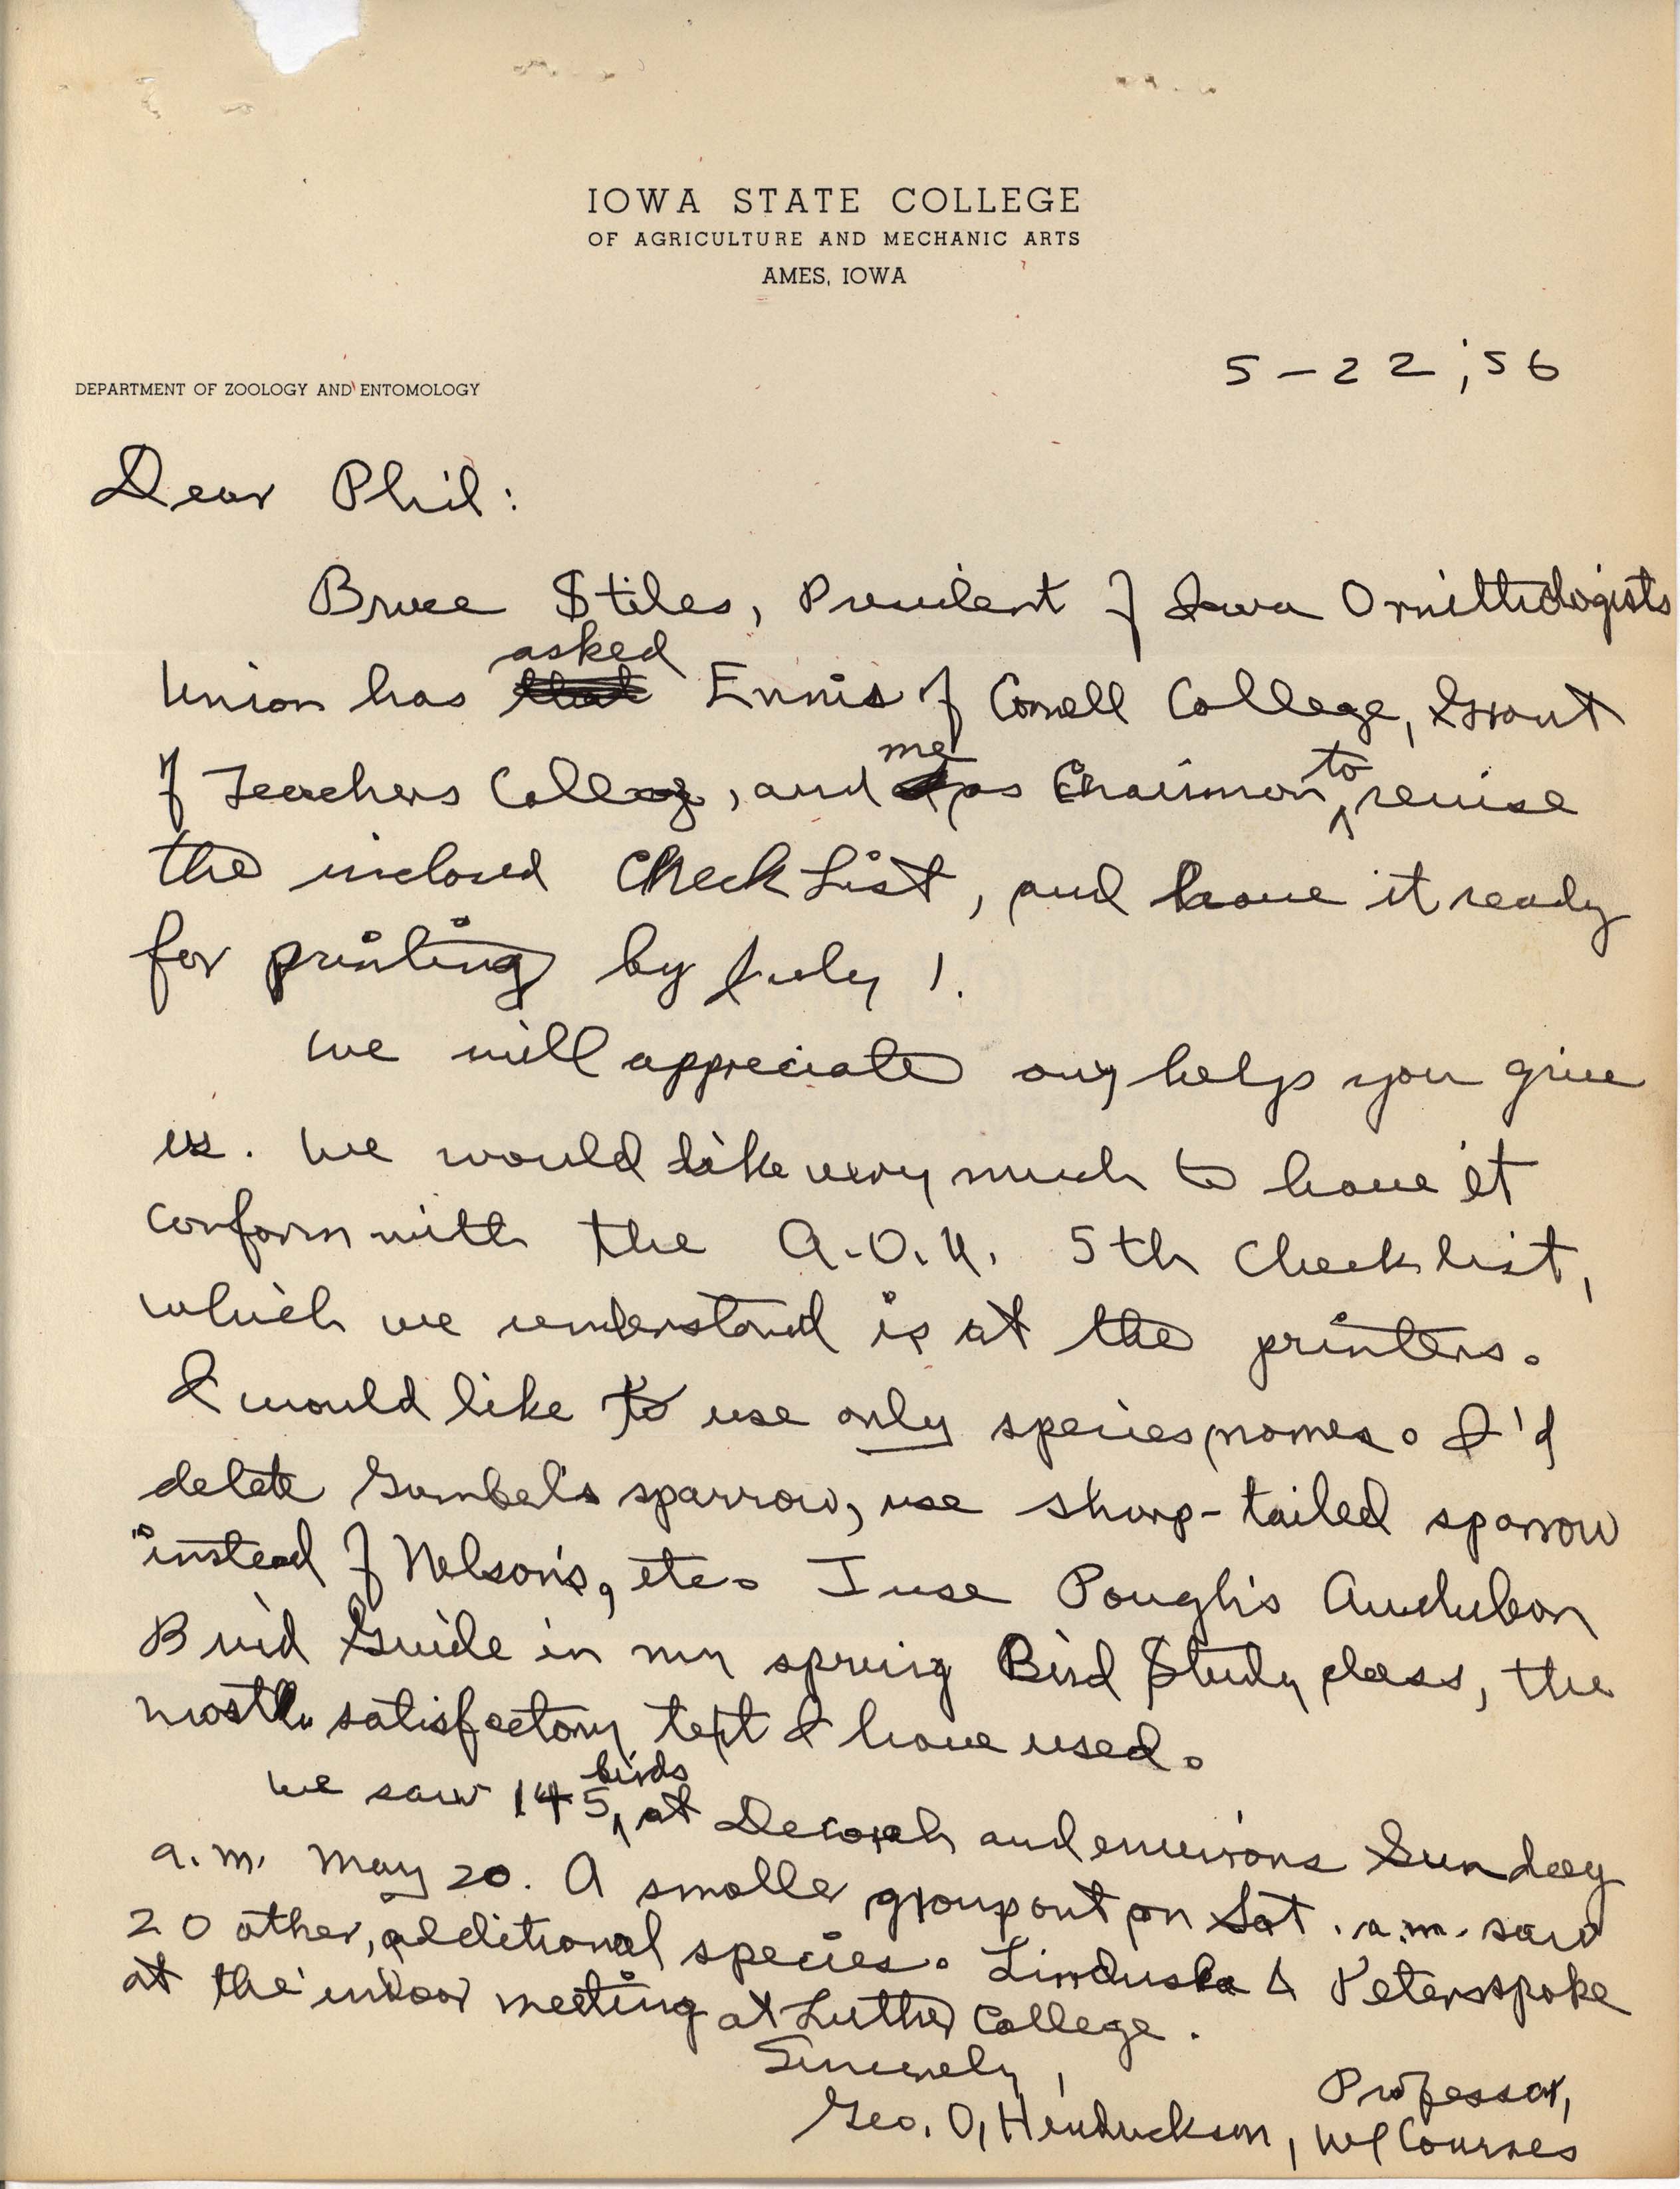 George Hendrickson letter to Philip DuMont regarding revising the Iowa Bird checklist, May 22, 1956